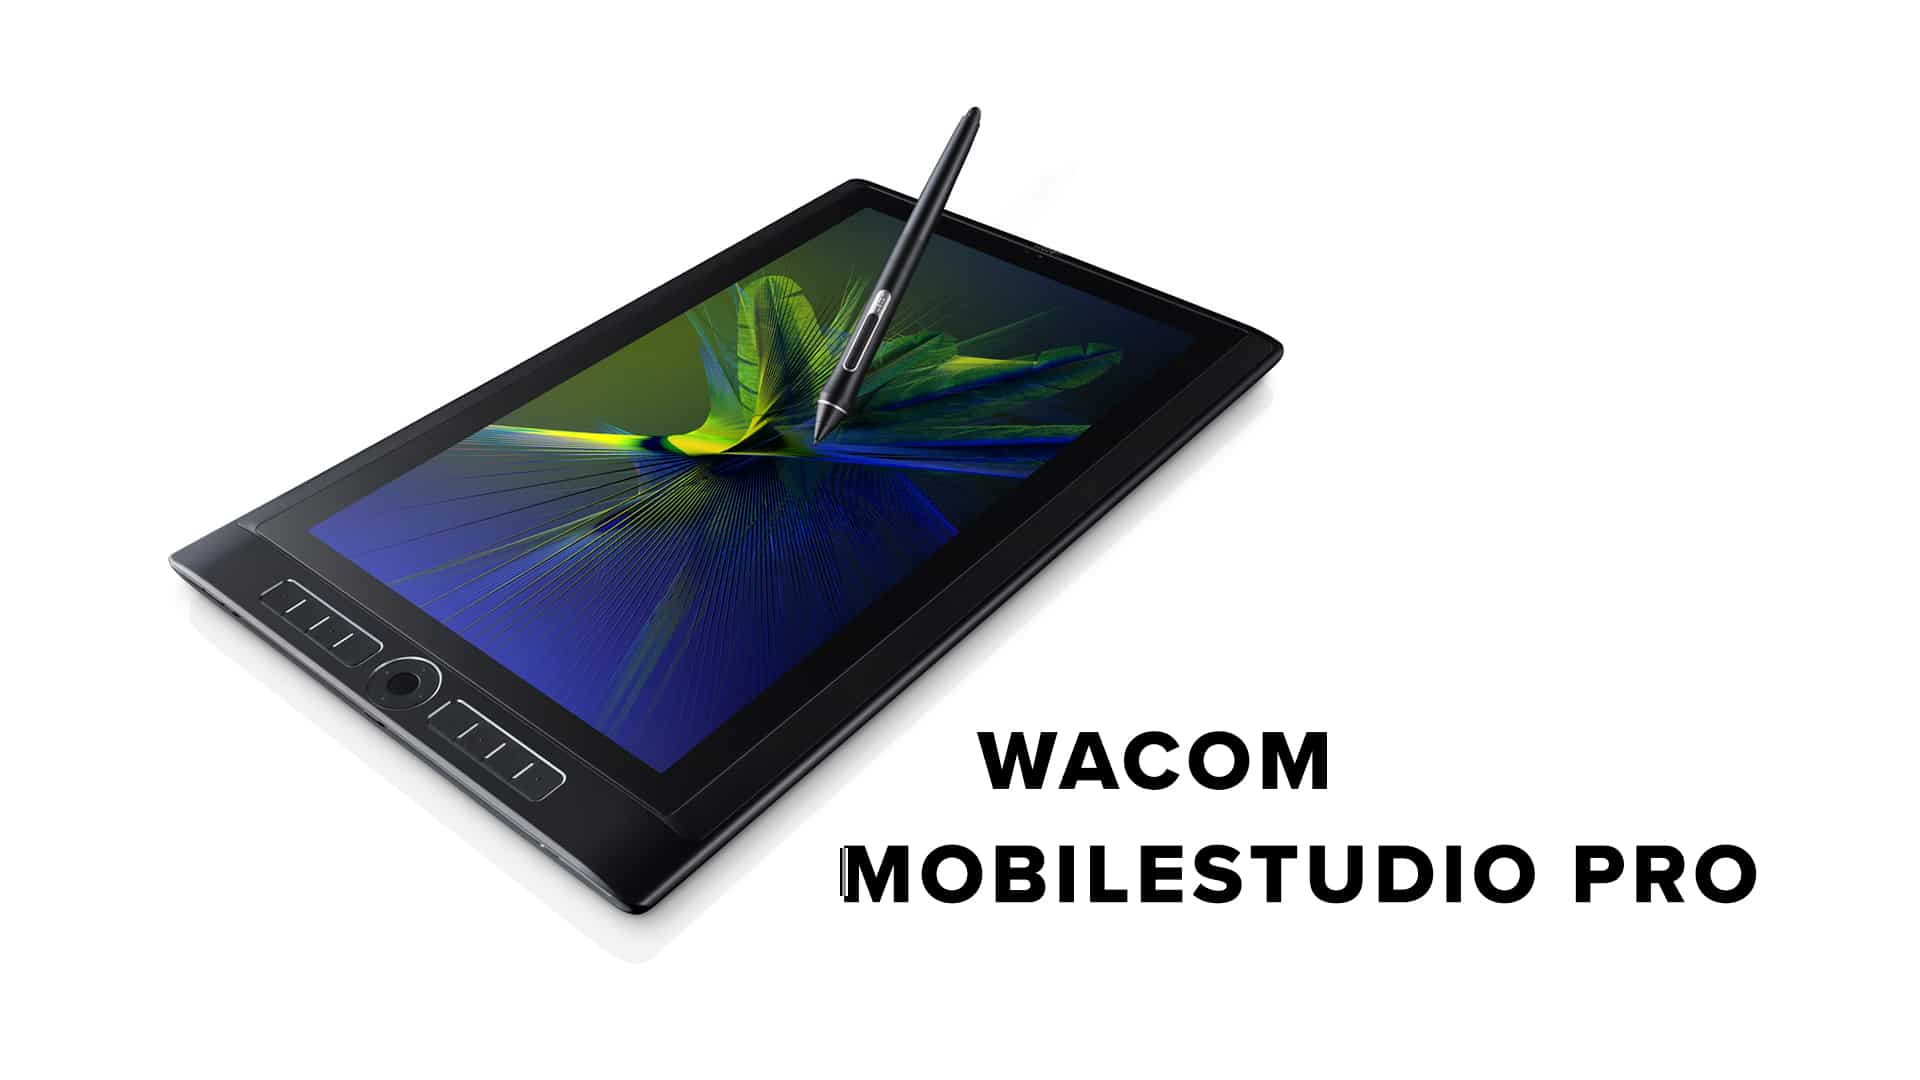 MobileStudio Pro - Wacom Investe Ulteriormente sui PC-Tablet